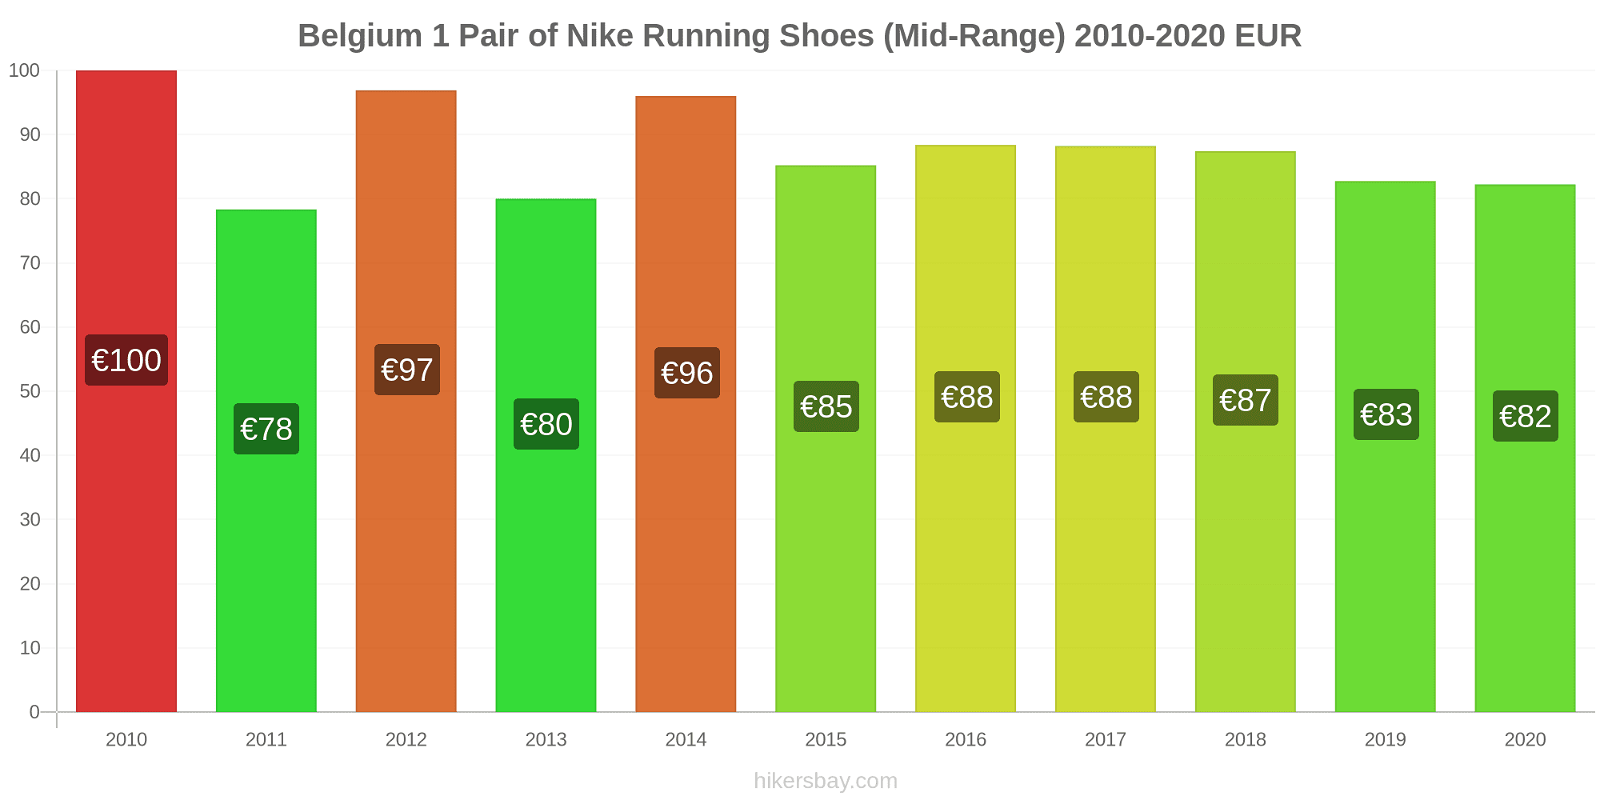 Belgium price changes 1 Pair of Nike Running Shoes (Mid-Range) hikersbay.com